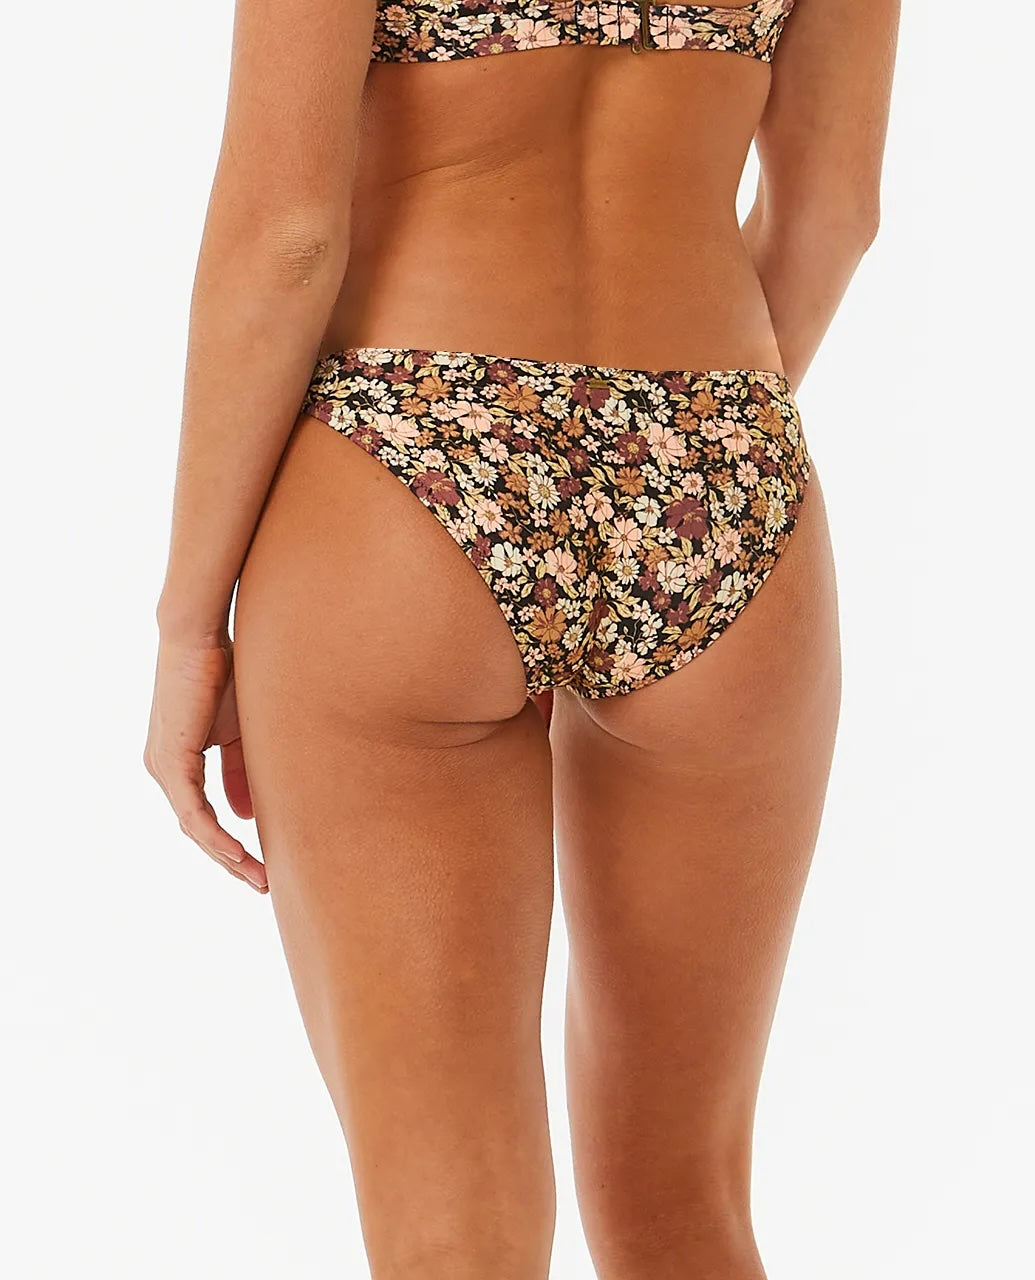 Women's SEA OF DREAMS FULL PANT Bikini Set Bottom